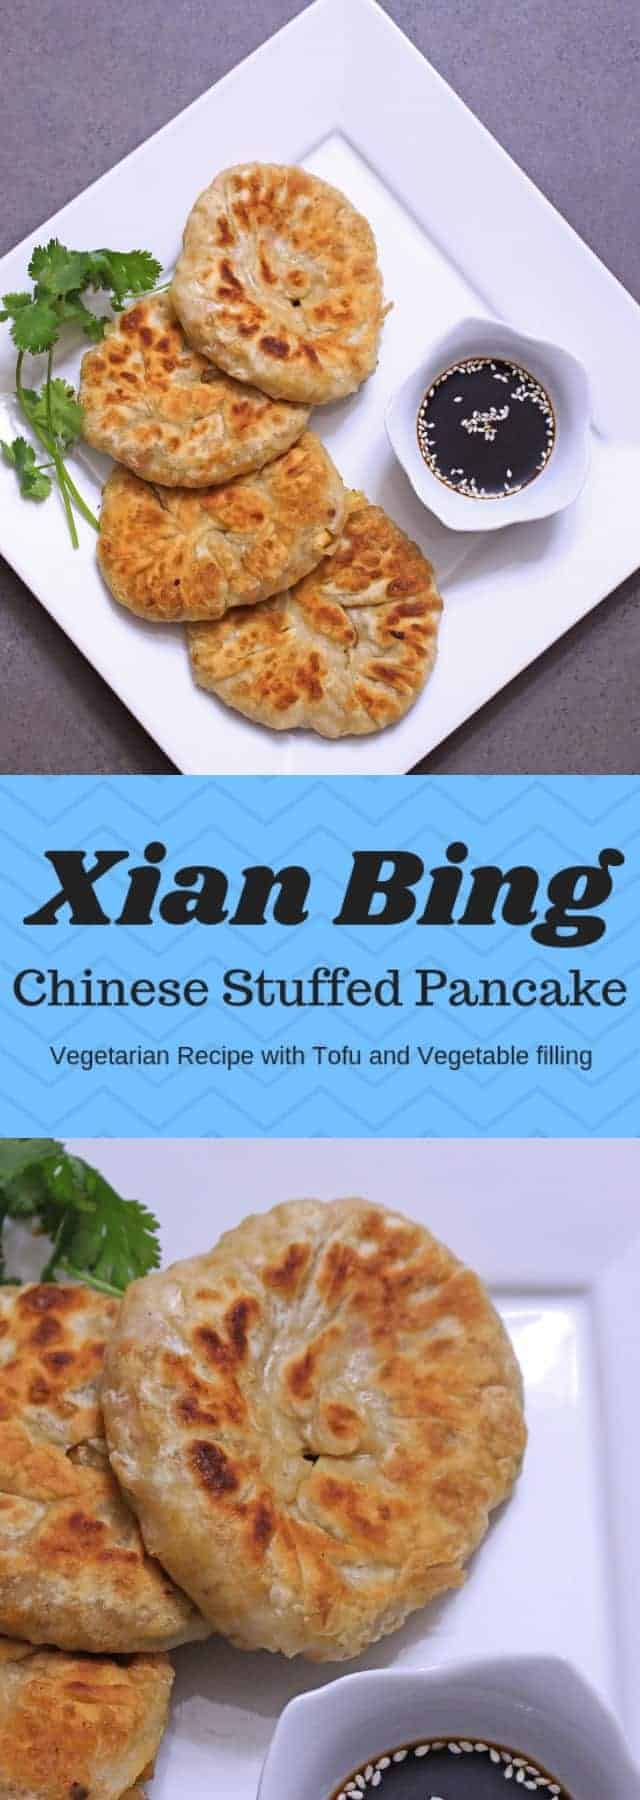 Xian Bing | Chinese Stuffed Pancake - Vegetarian - My Cooking Journey